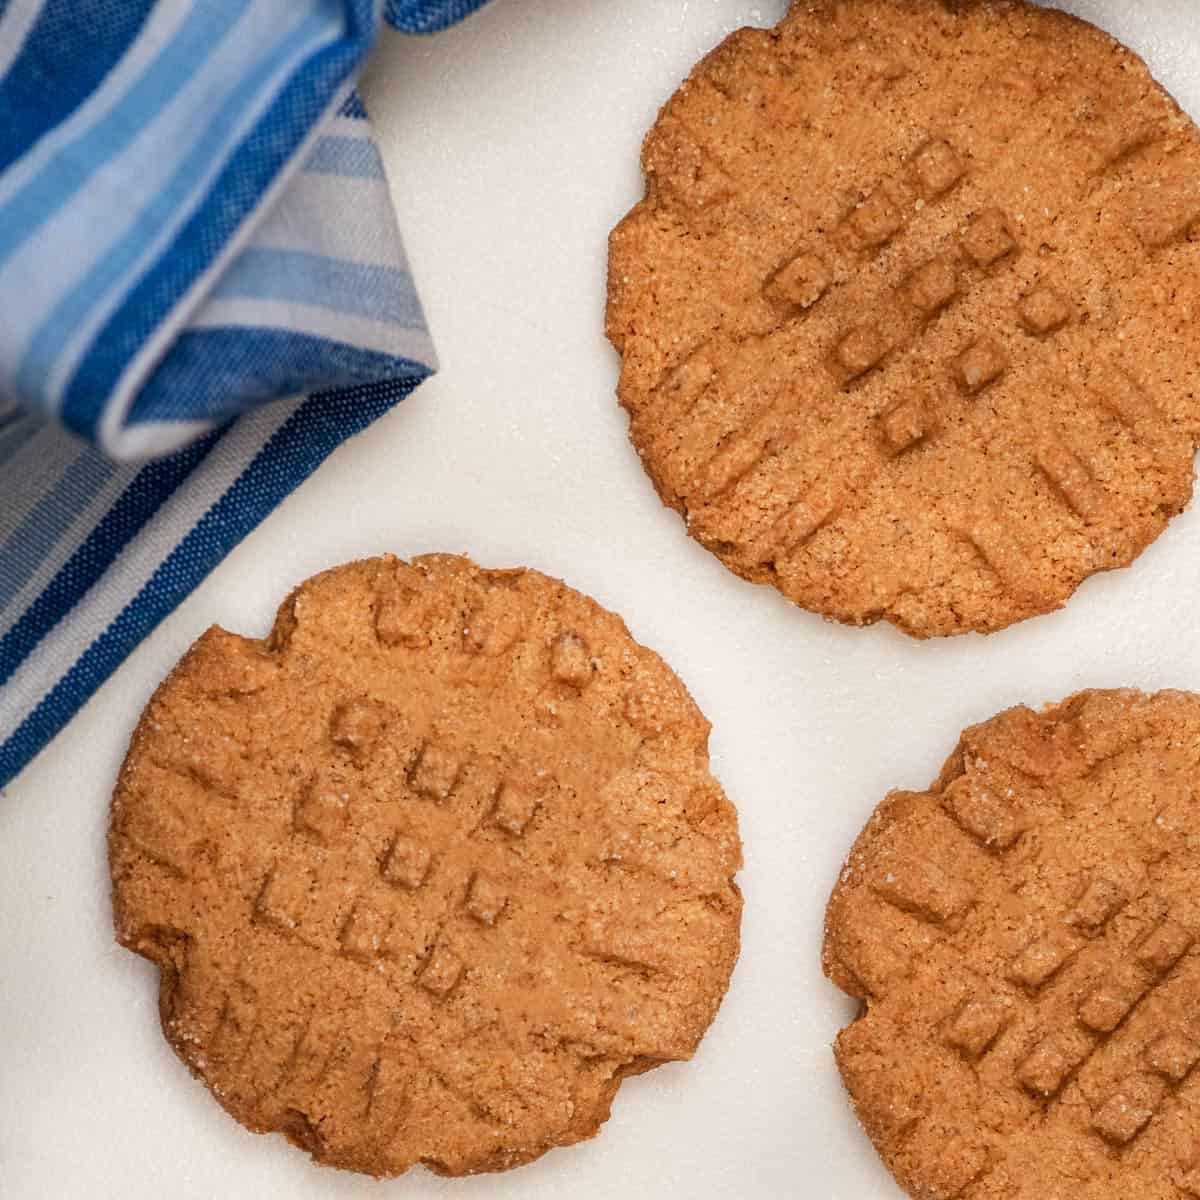 Vegan peanut butter cookies on a cutting board.